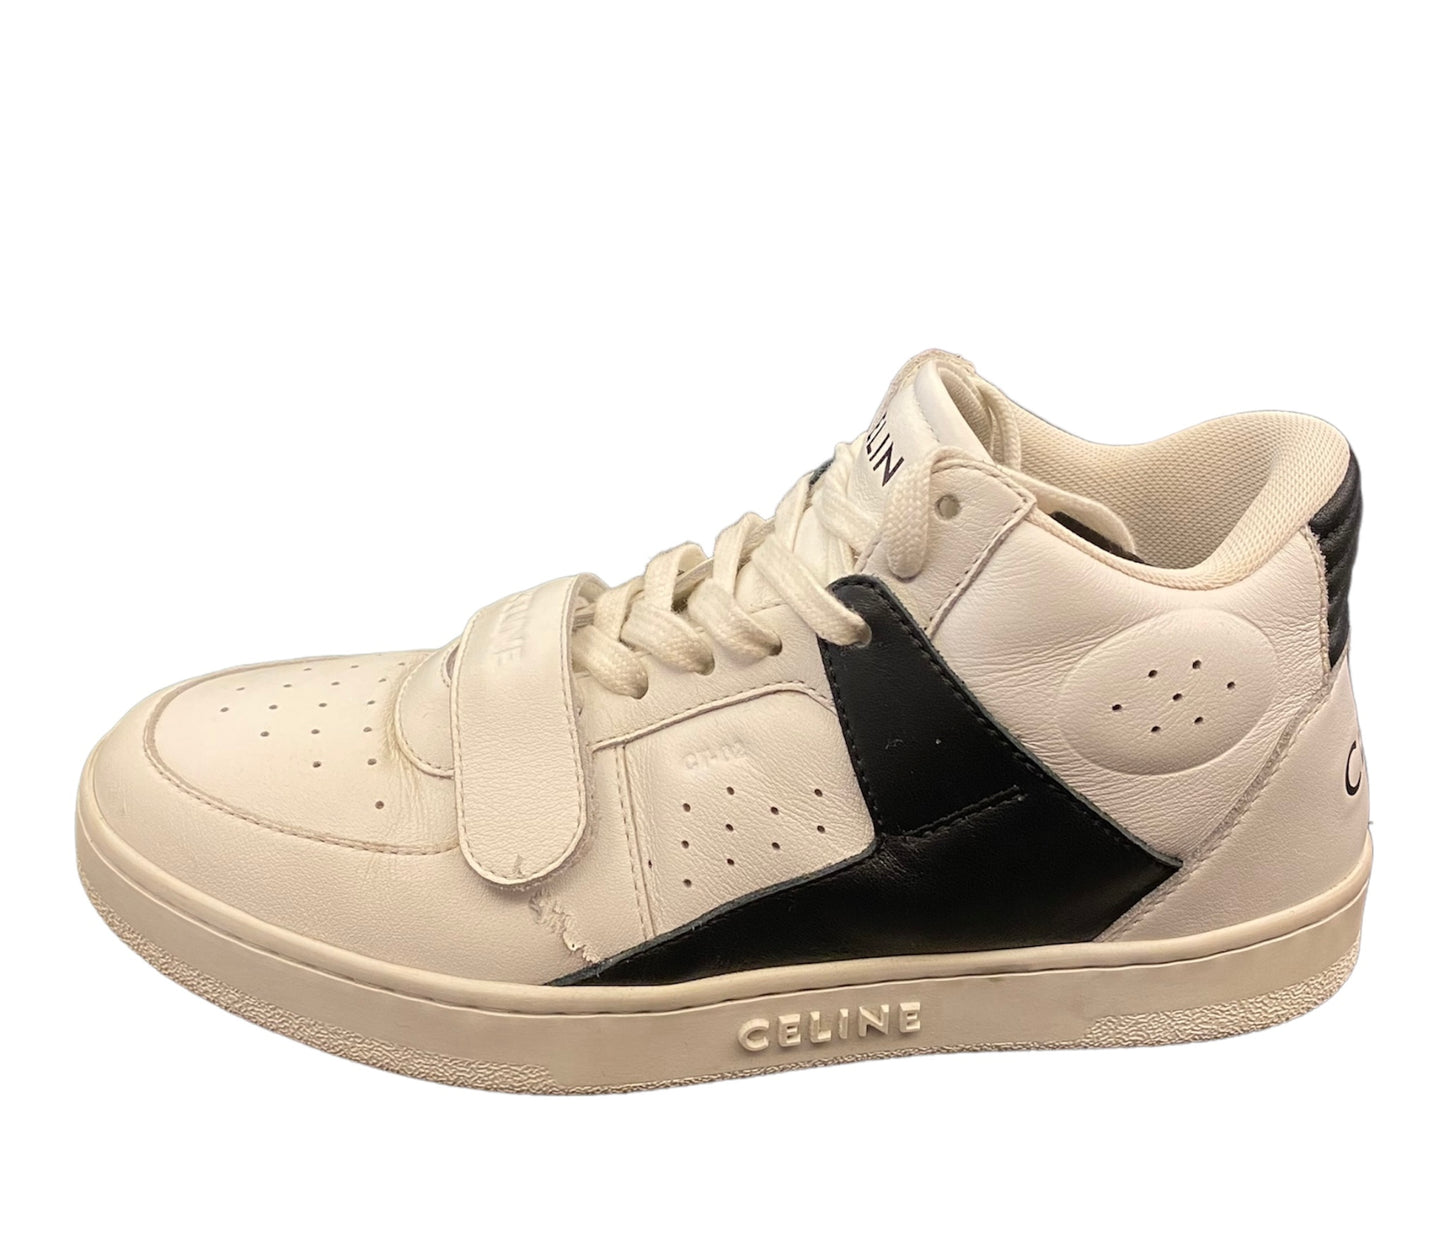 CÉLINE CT-02 Mid-Top Sneakers Size 38